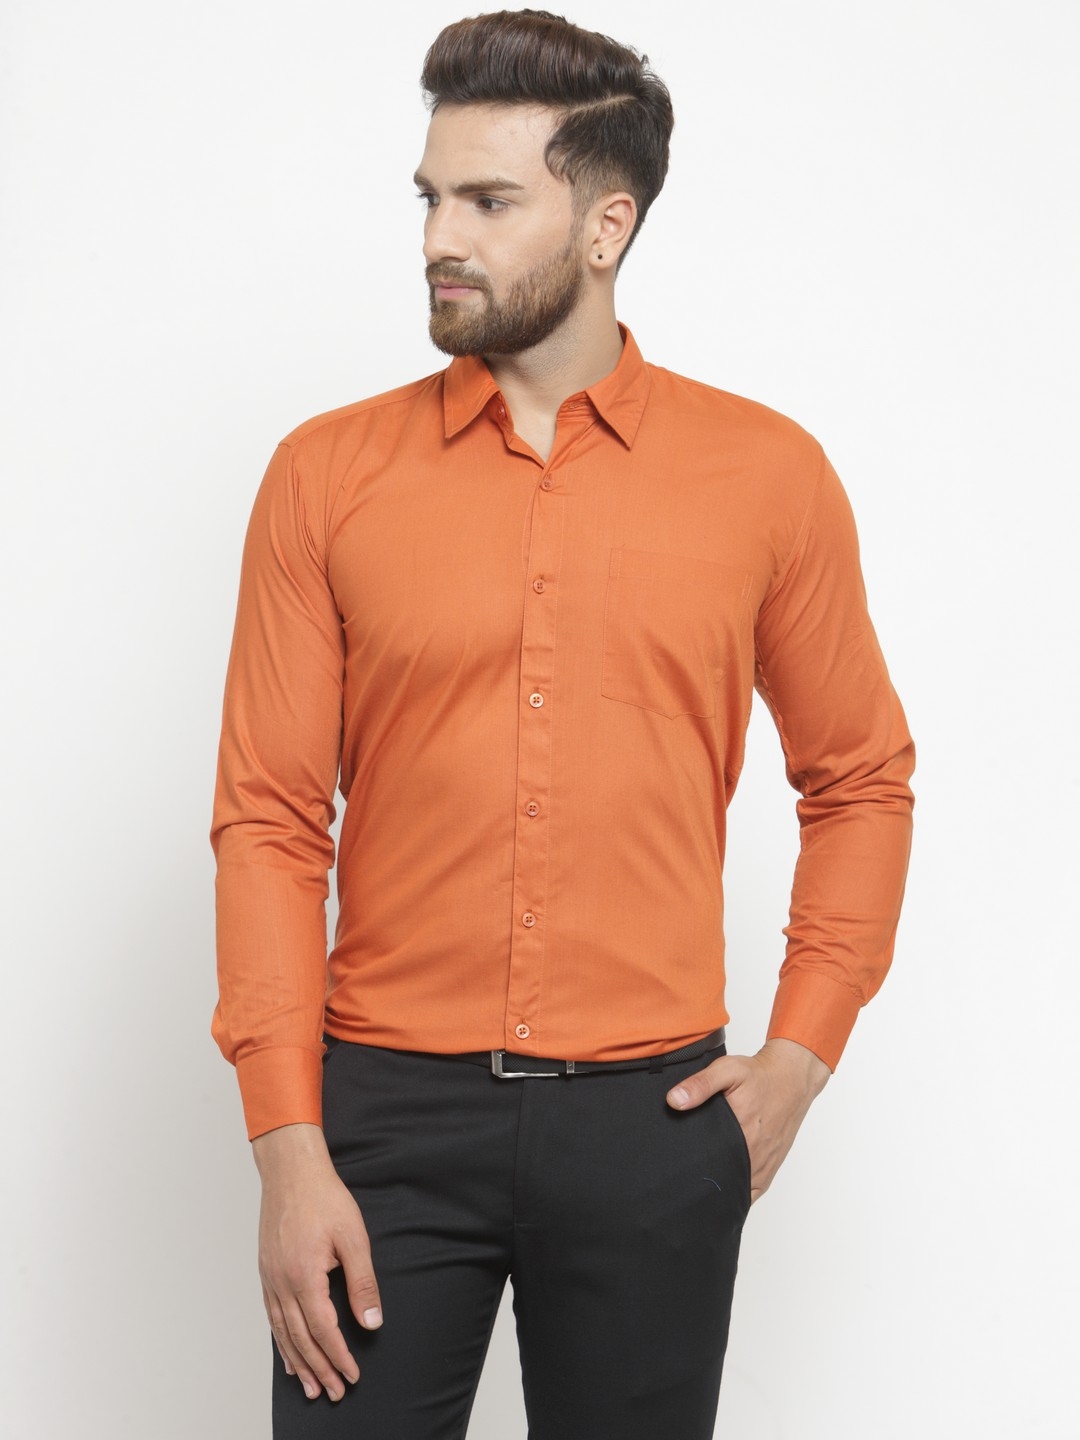 The Best Orange Tshirt Outfit Ideas For Women & Men In 2022